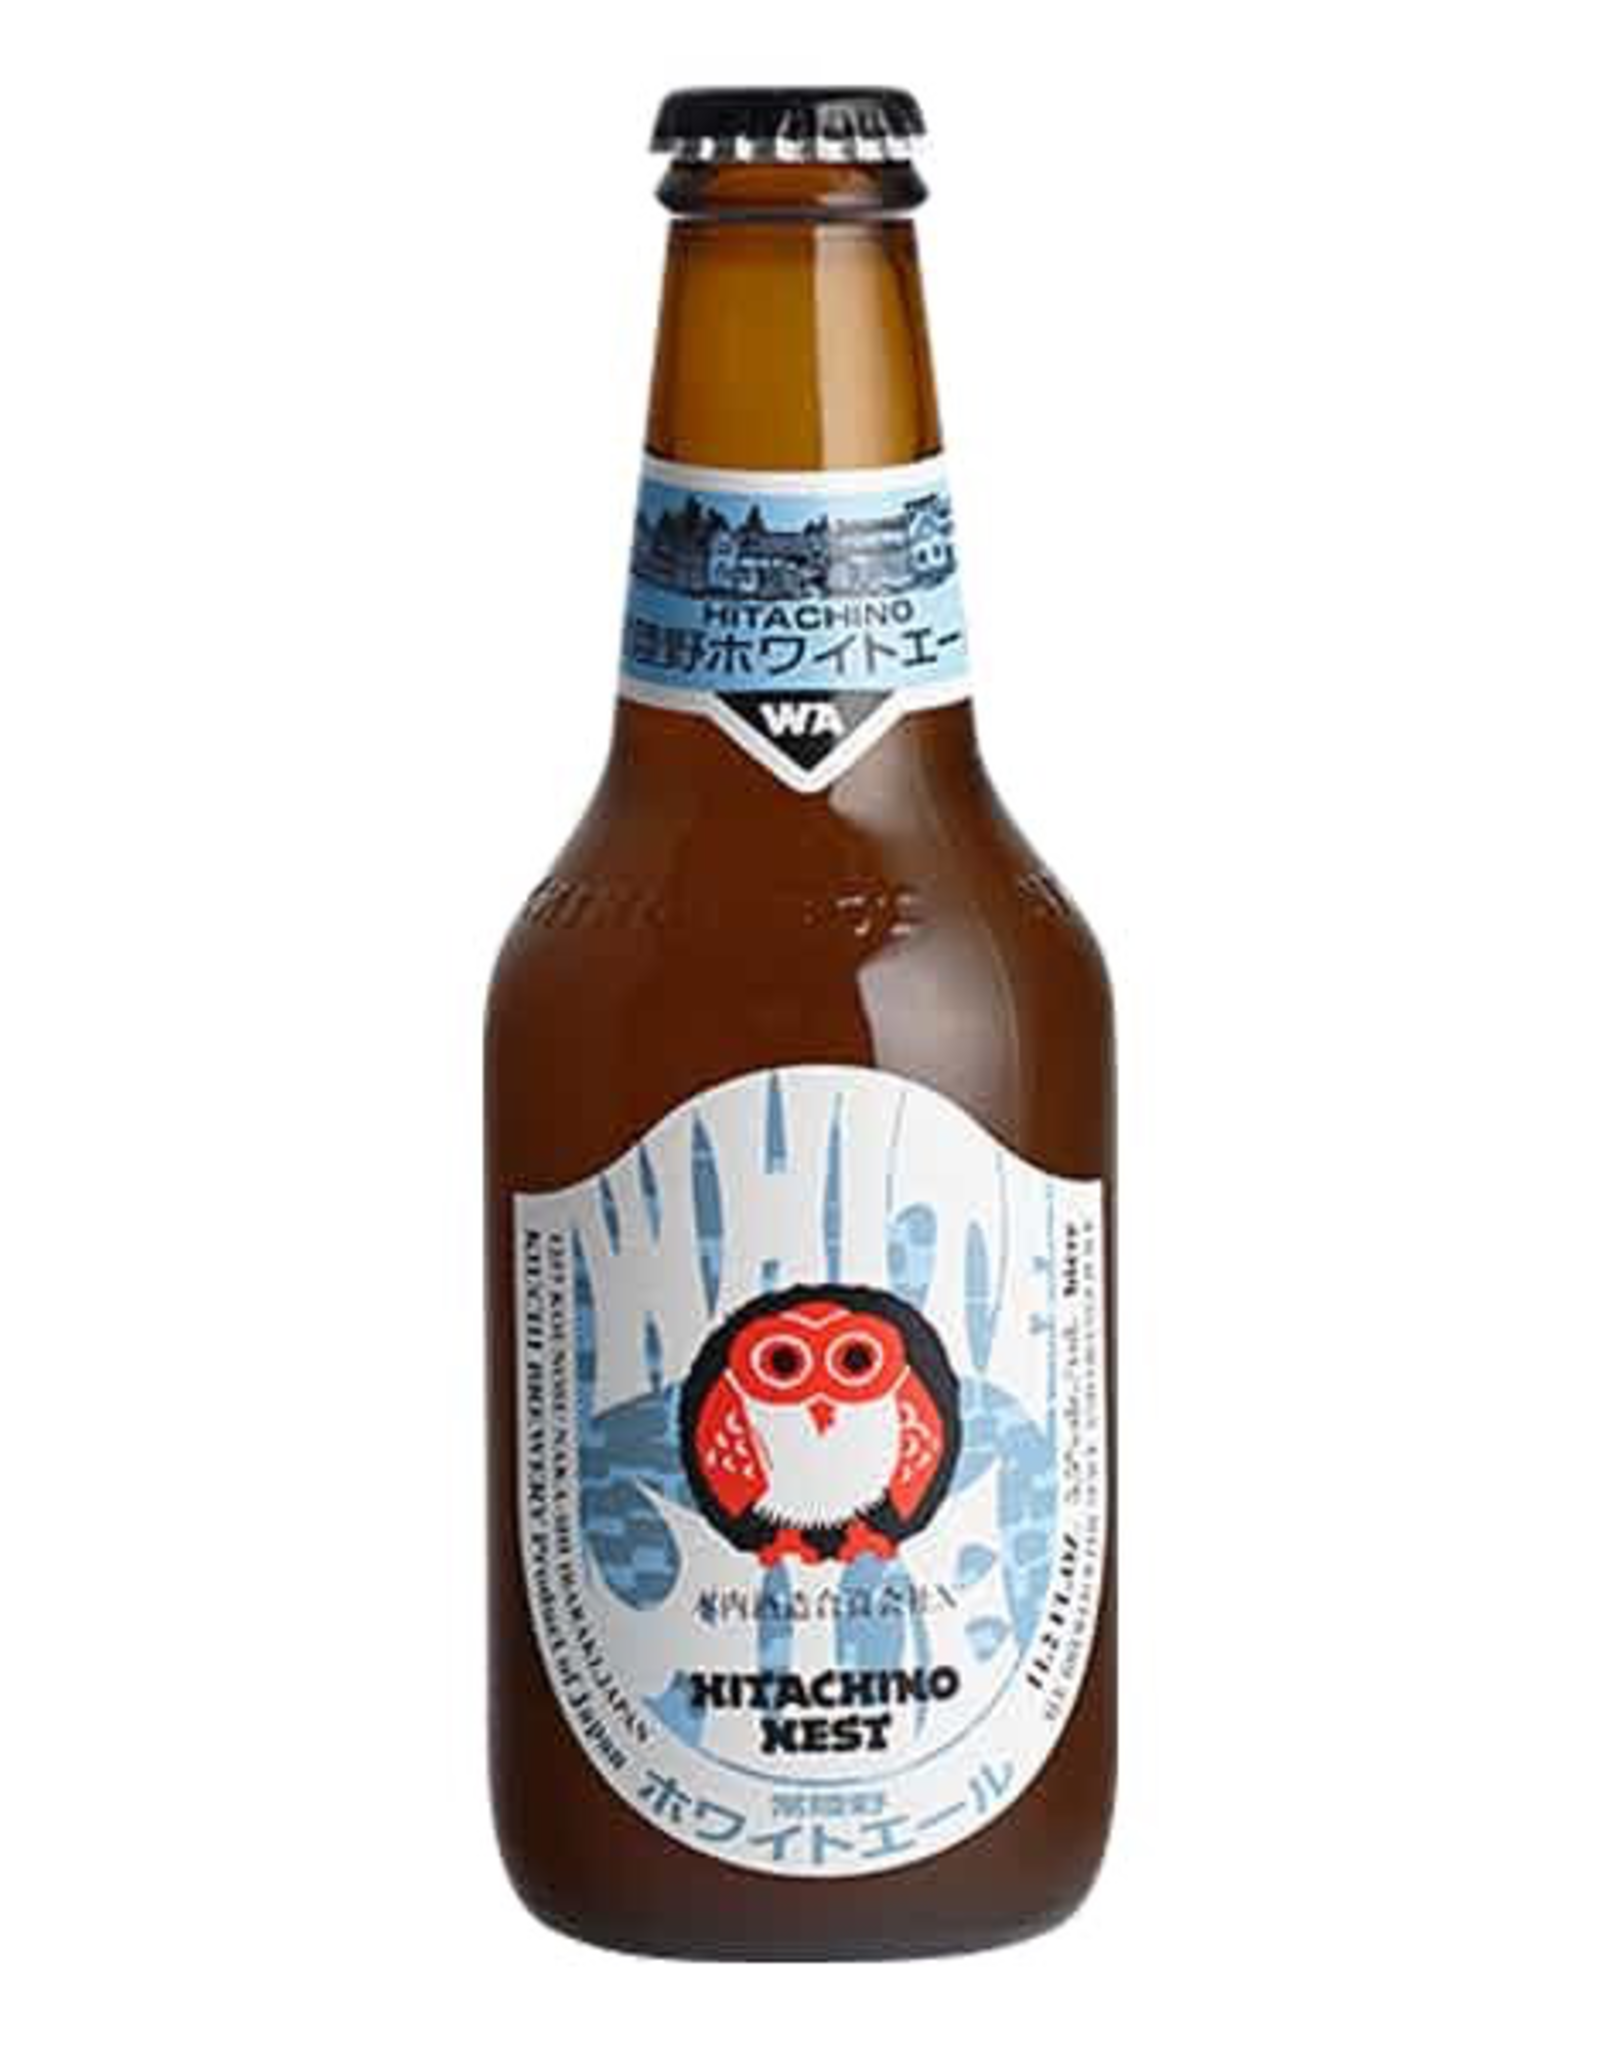 Beer Kiuchi Brewery, Hitachino Nest, White Ale, Japan, 5.5% Alc